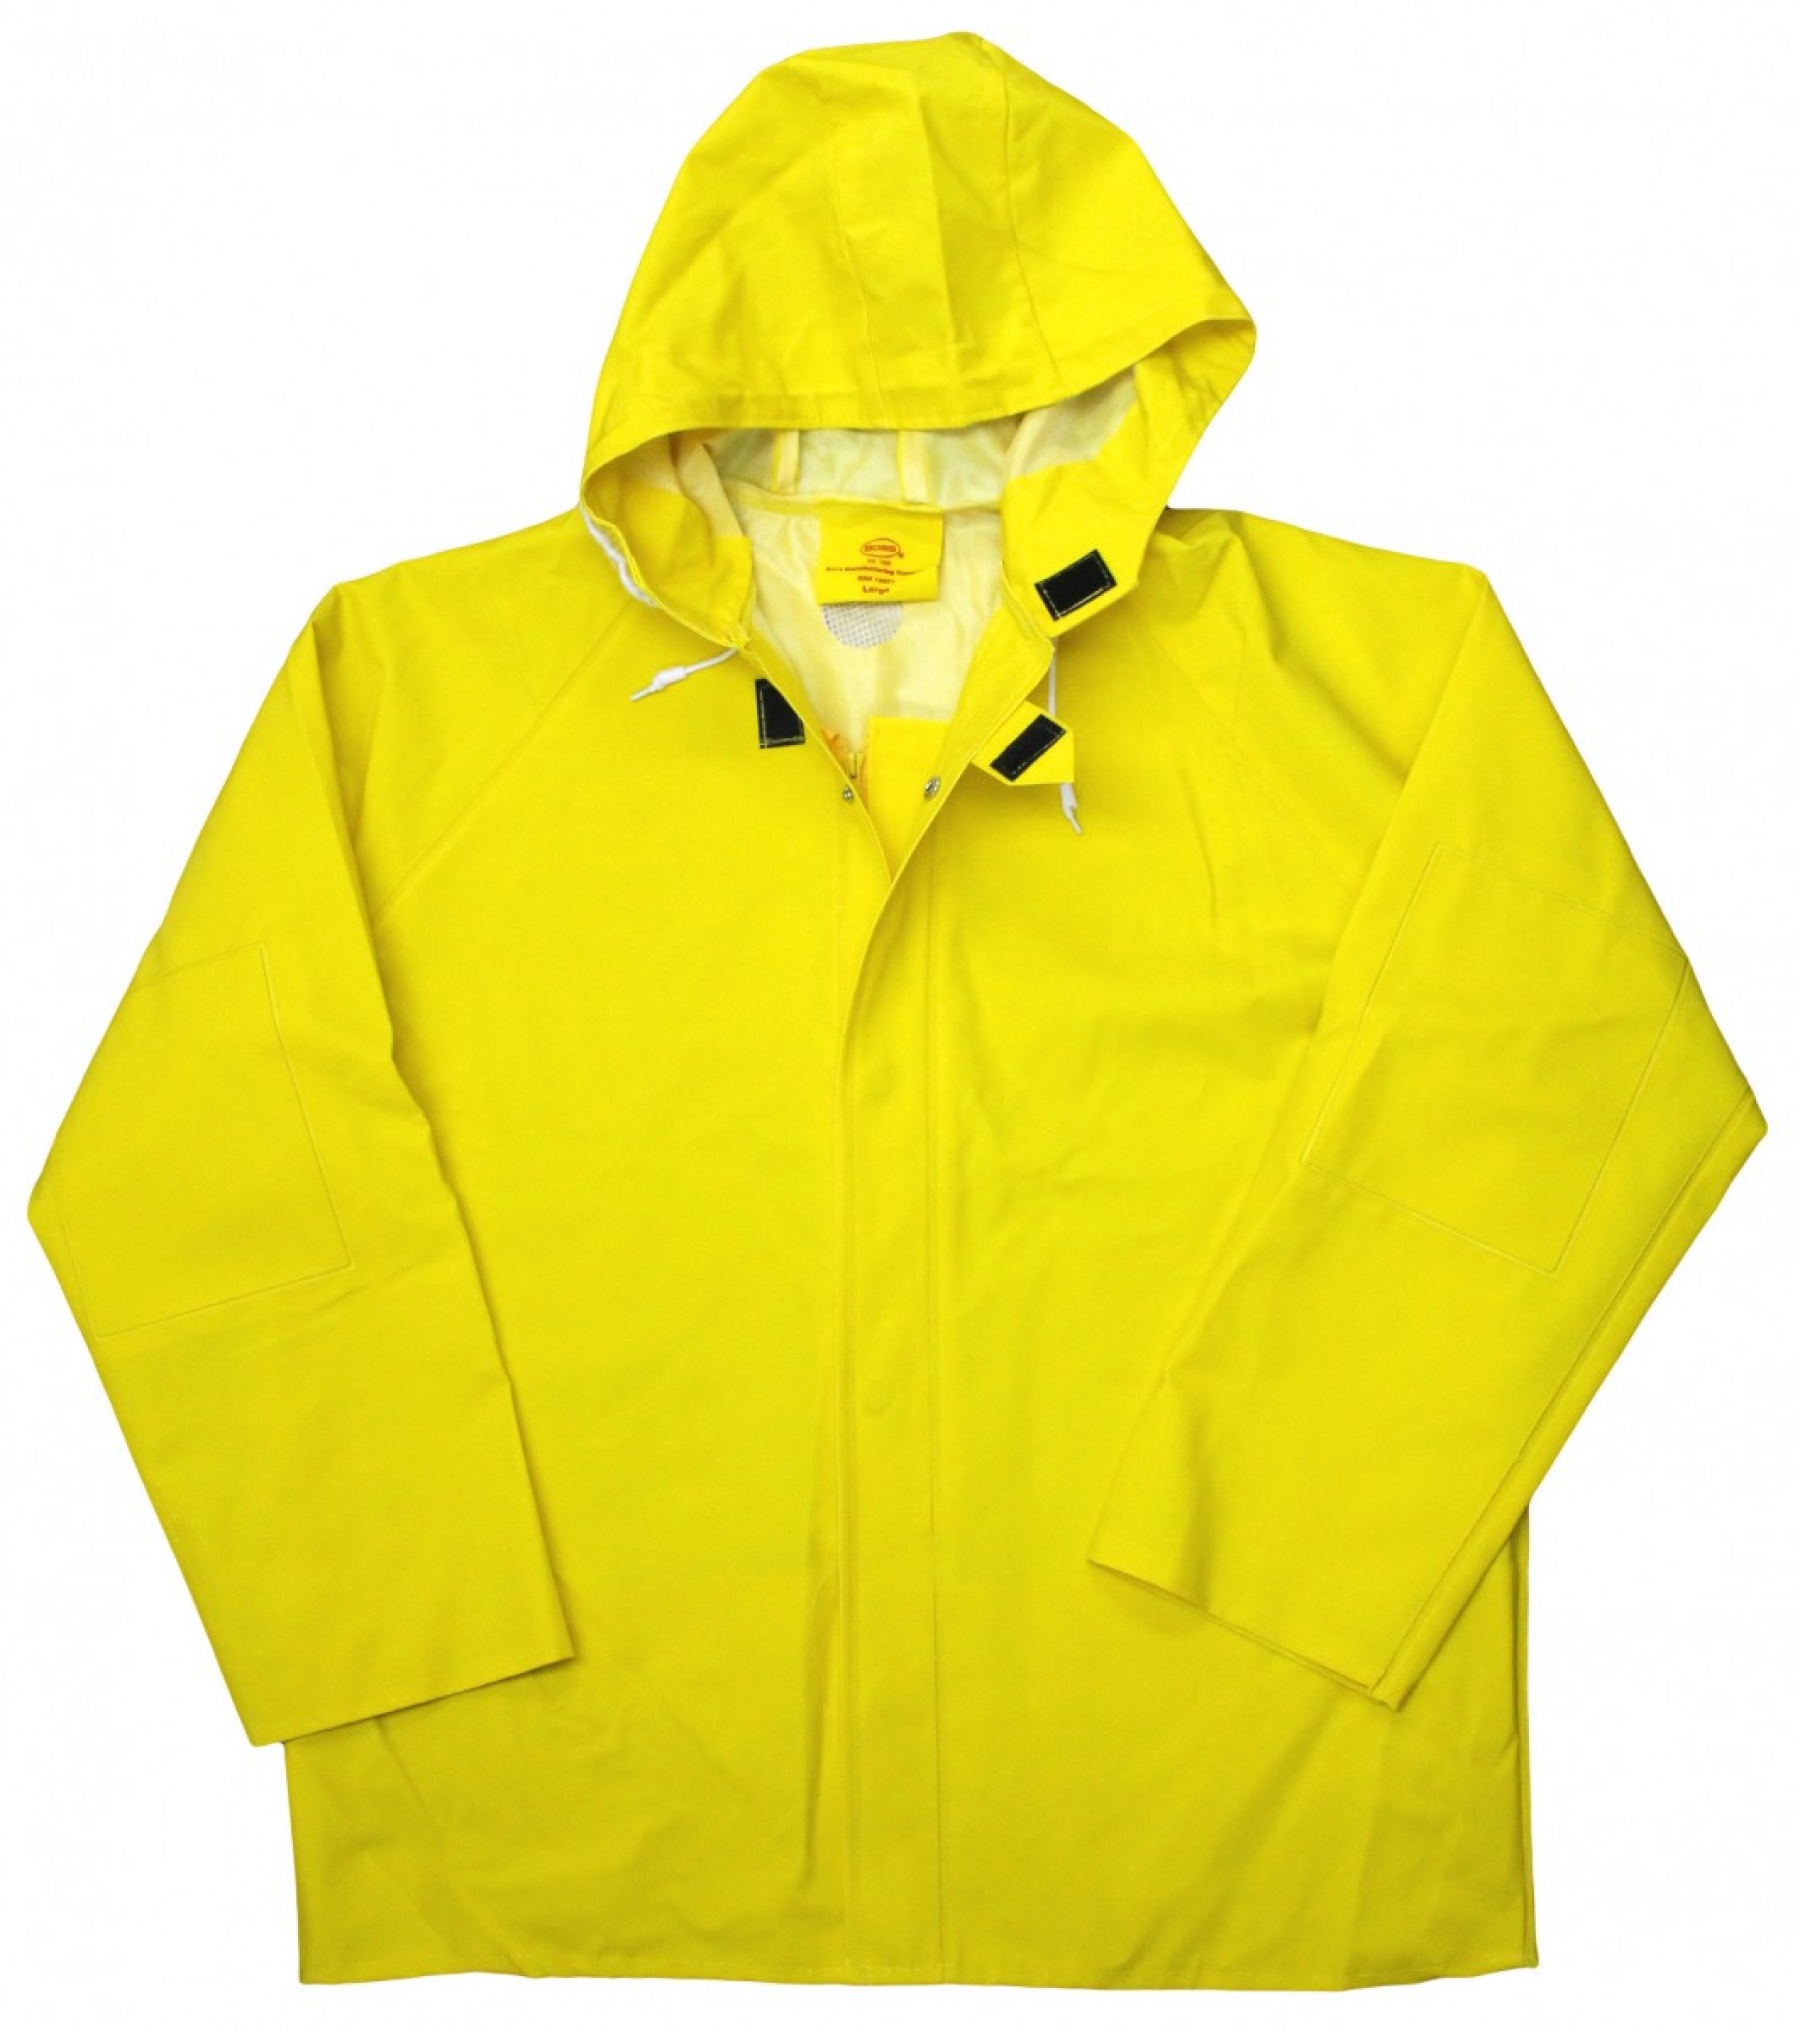 Buy Heavy Duty Rain Jacket | Rainwear, Emergency Supplies from Safety ...